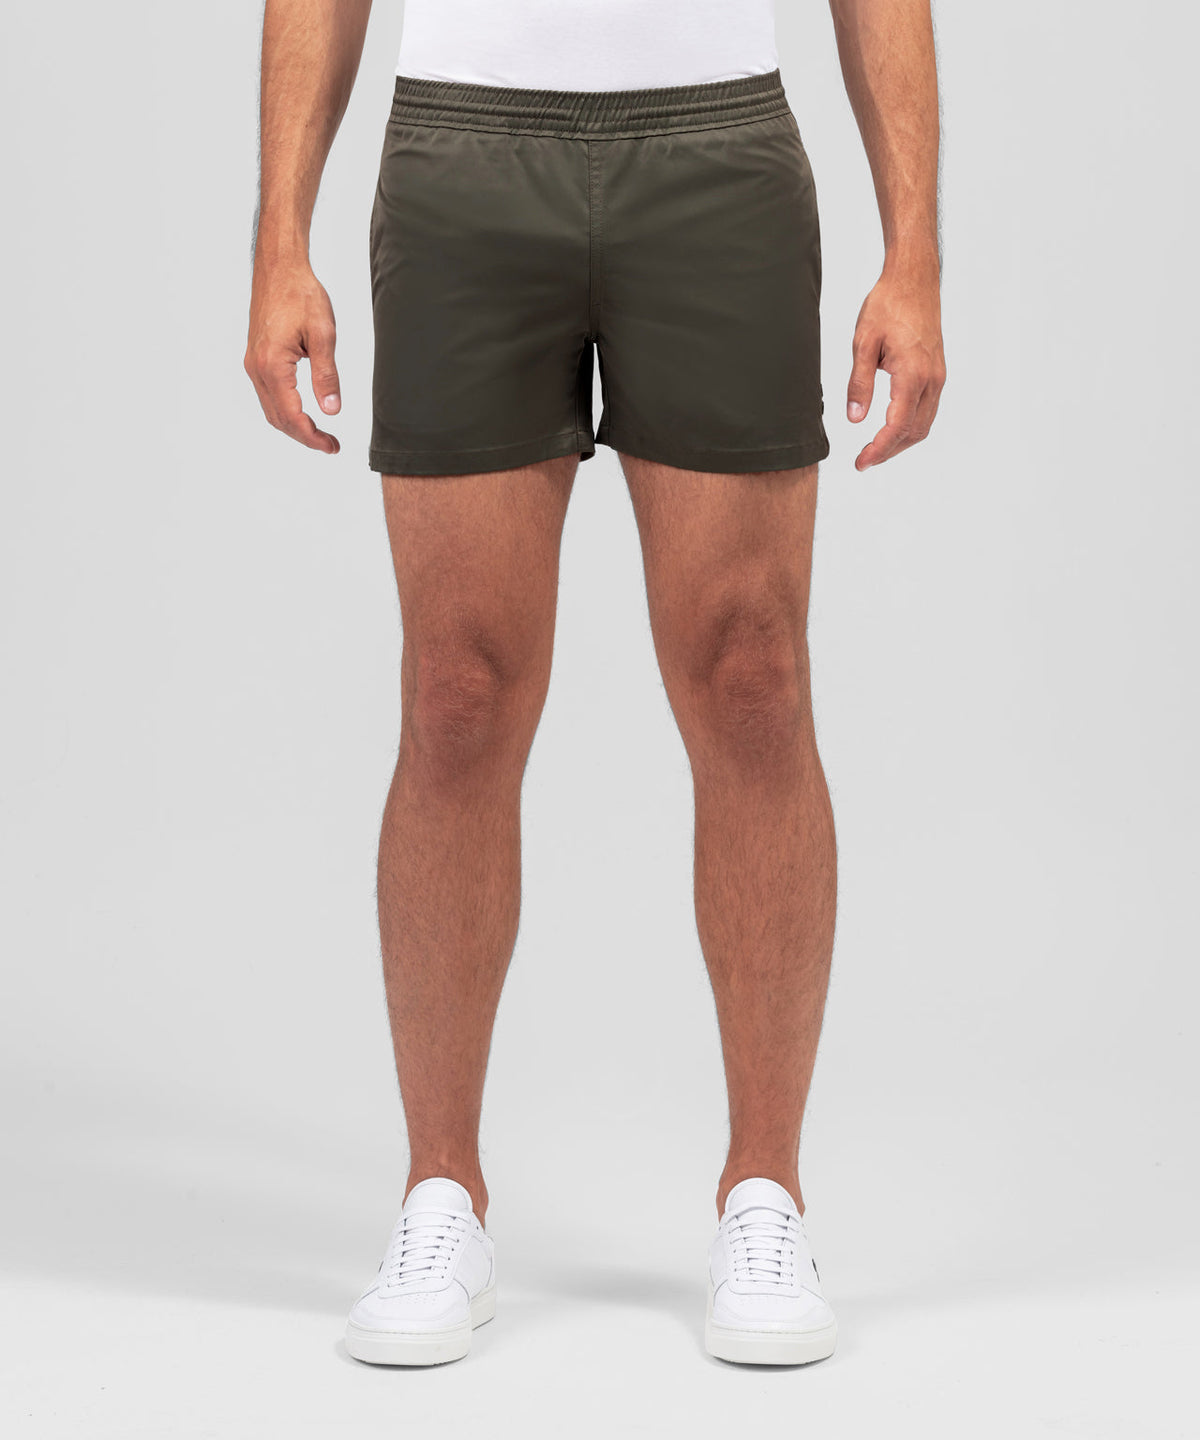 Exerciser Shorts: Khaki